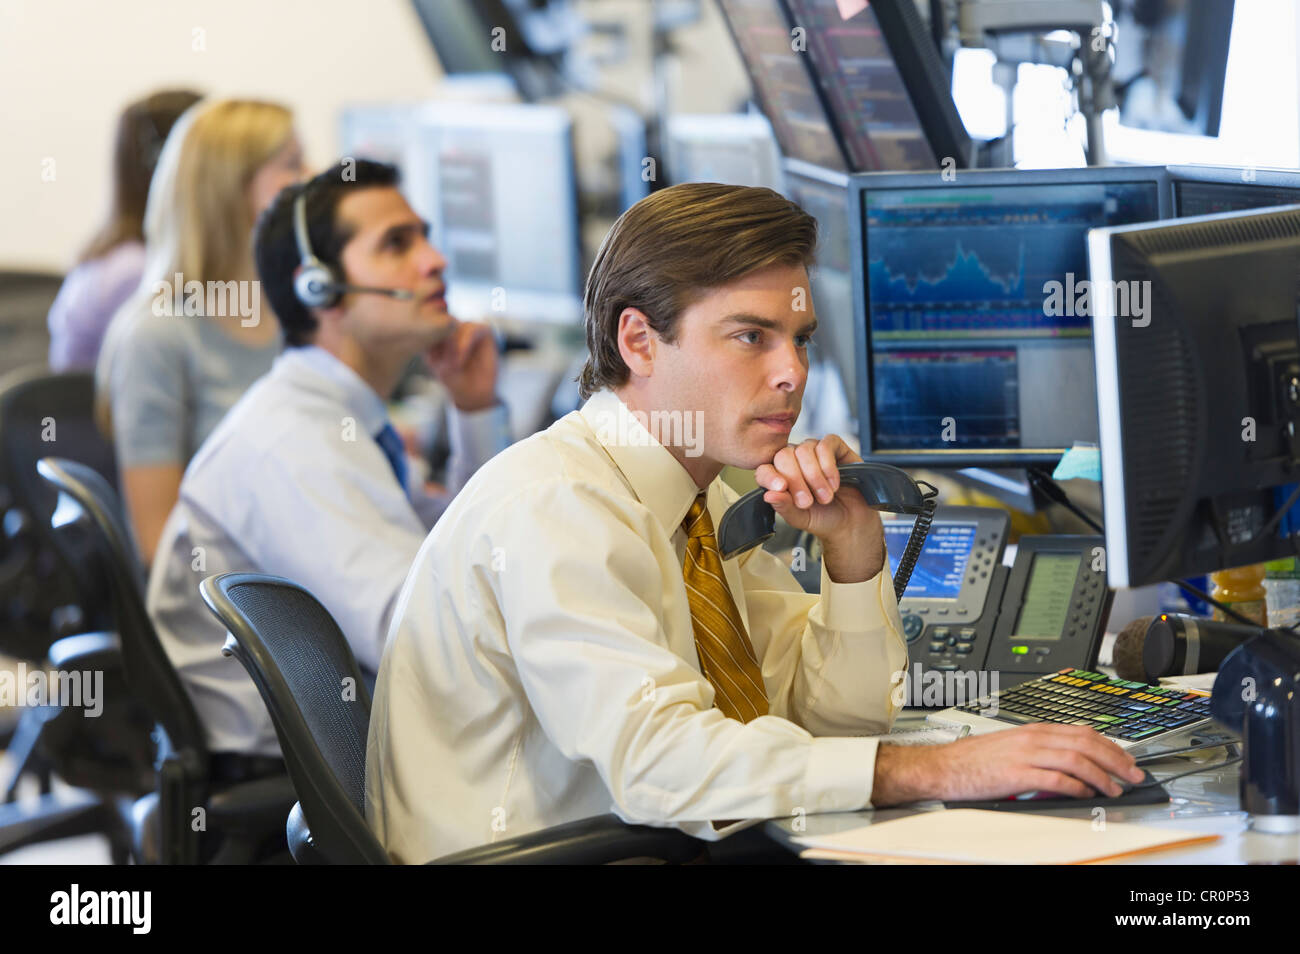 USA, New York, New York City, Traders at trading desk Stock Photo